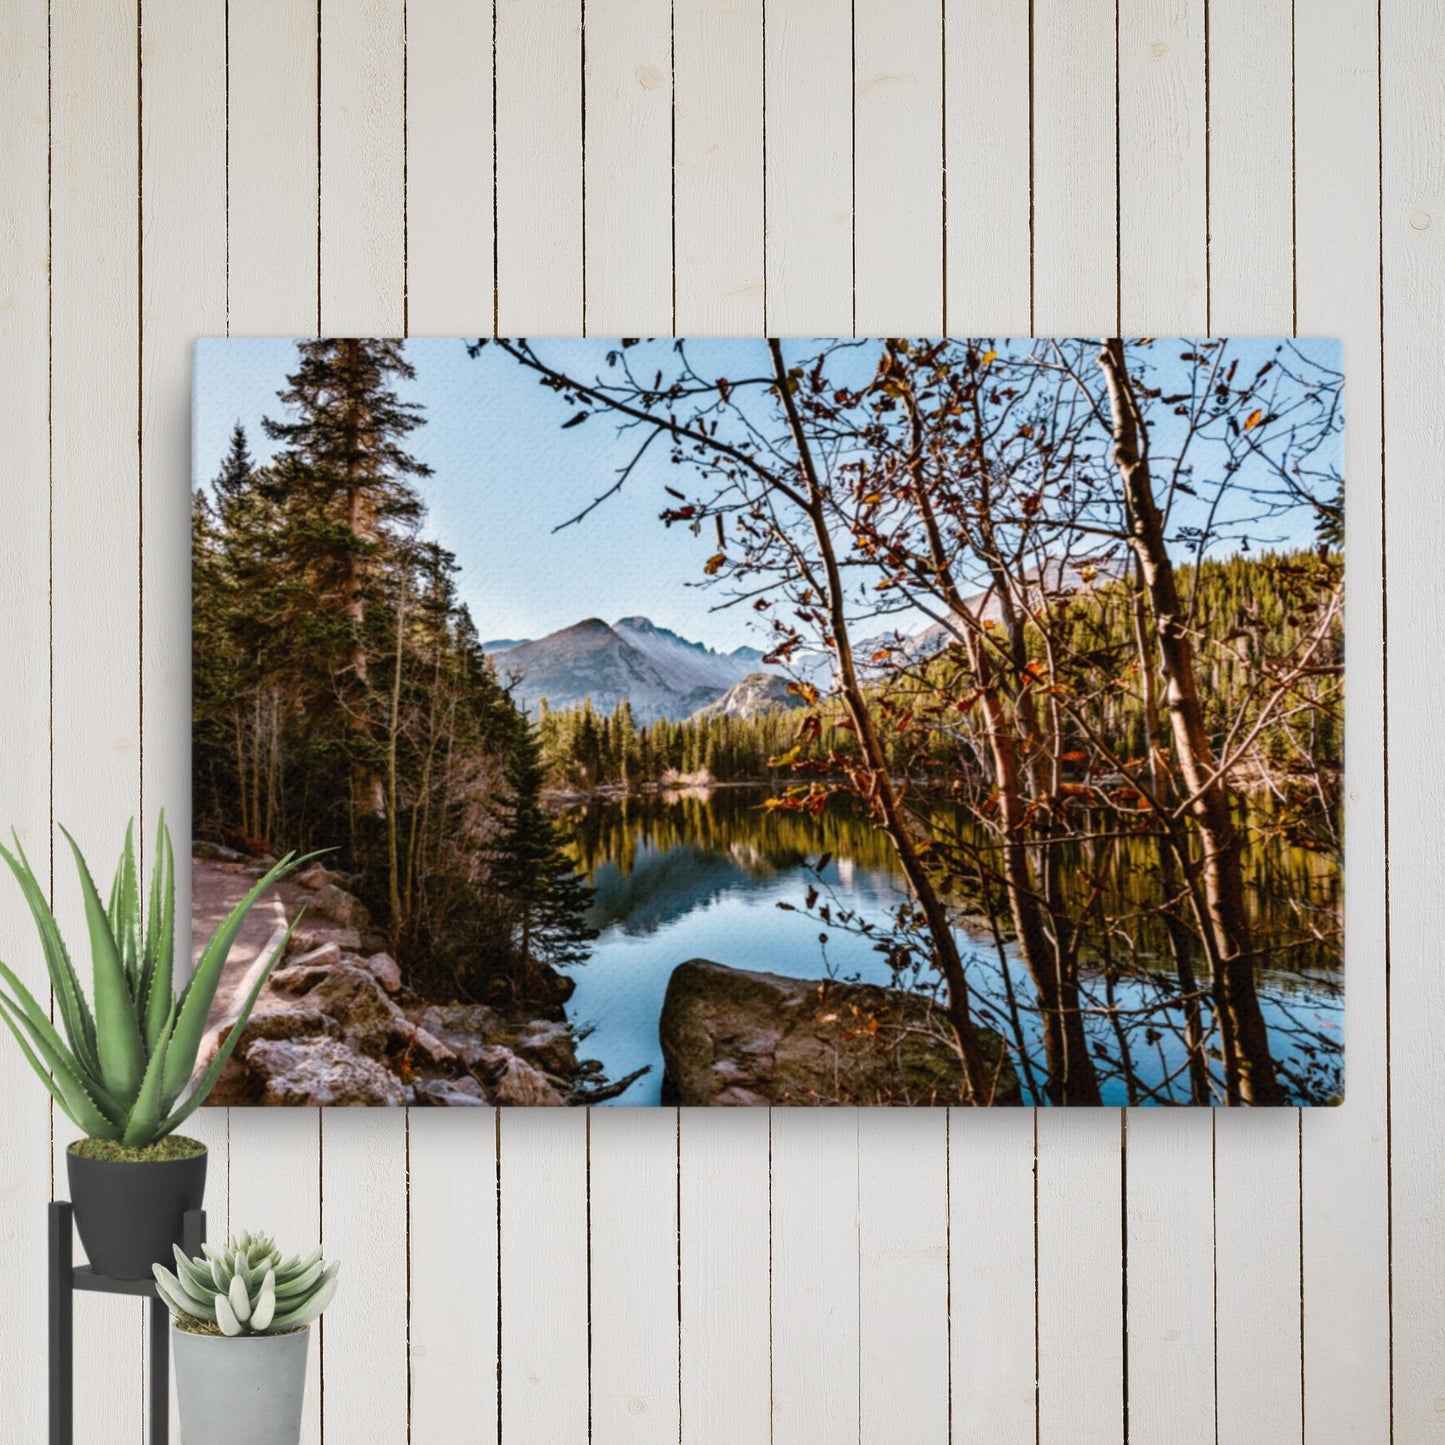 Rocky Mountain Bear Lake Colorado Canvas Wall Art Decor, Reflections, Serenity, Autumn Landscape, Nature Wall Art, Mountains Tree Scenery